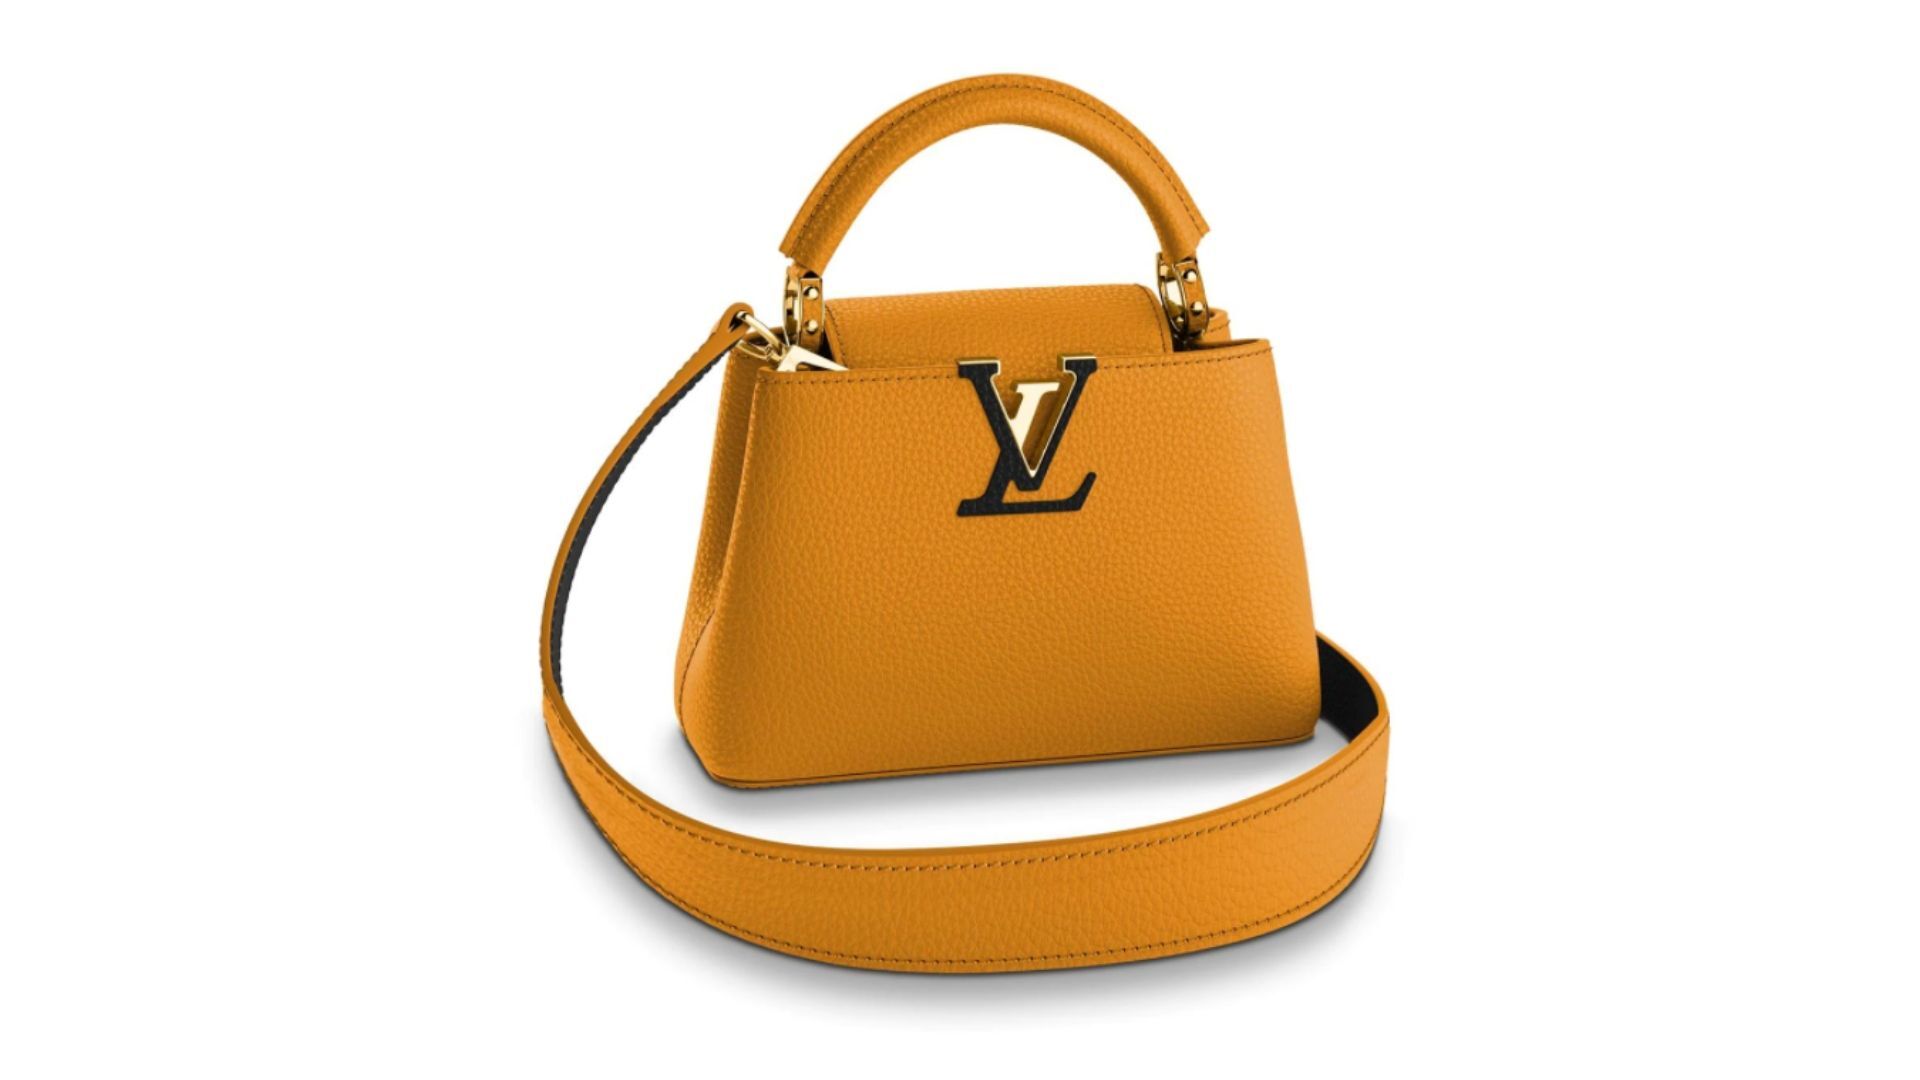 Tie-dye for. Introducing Louis Vuitton's Shibori inspired LV